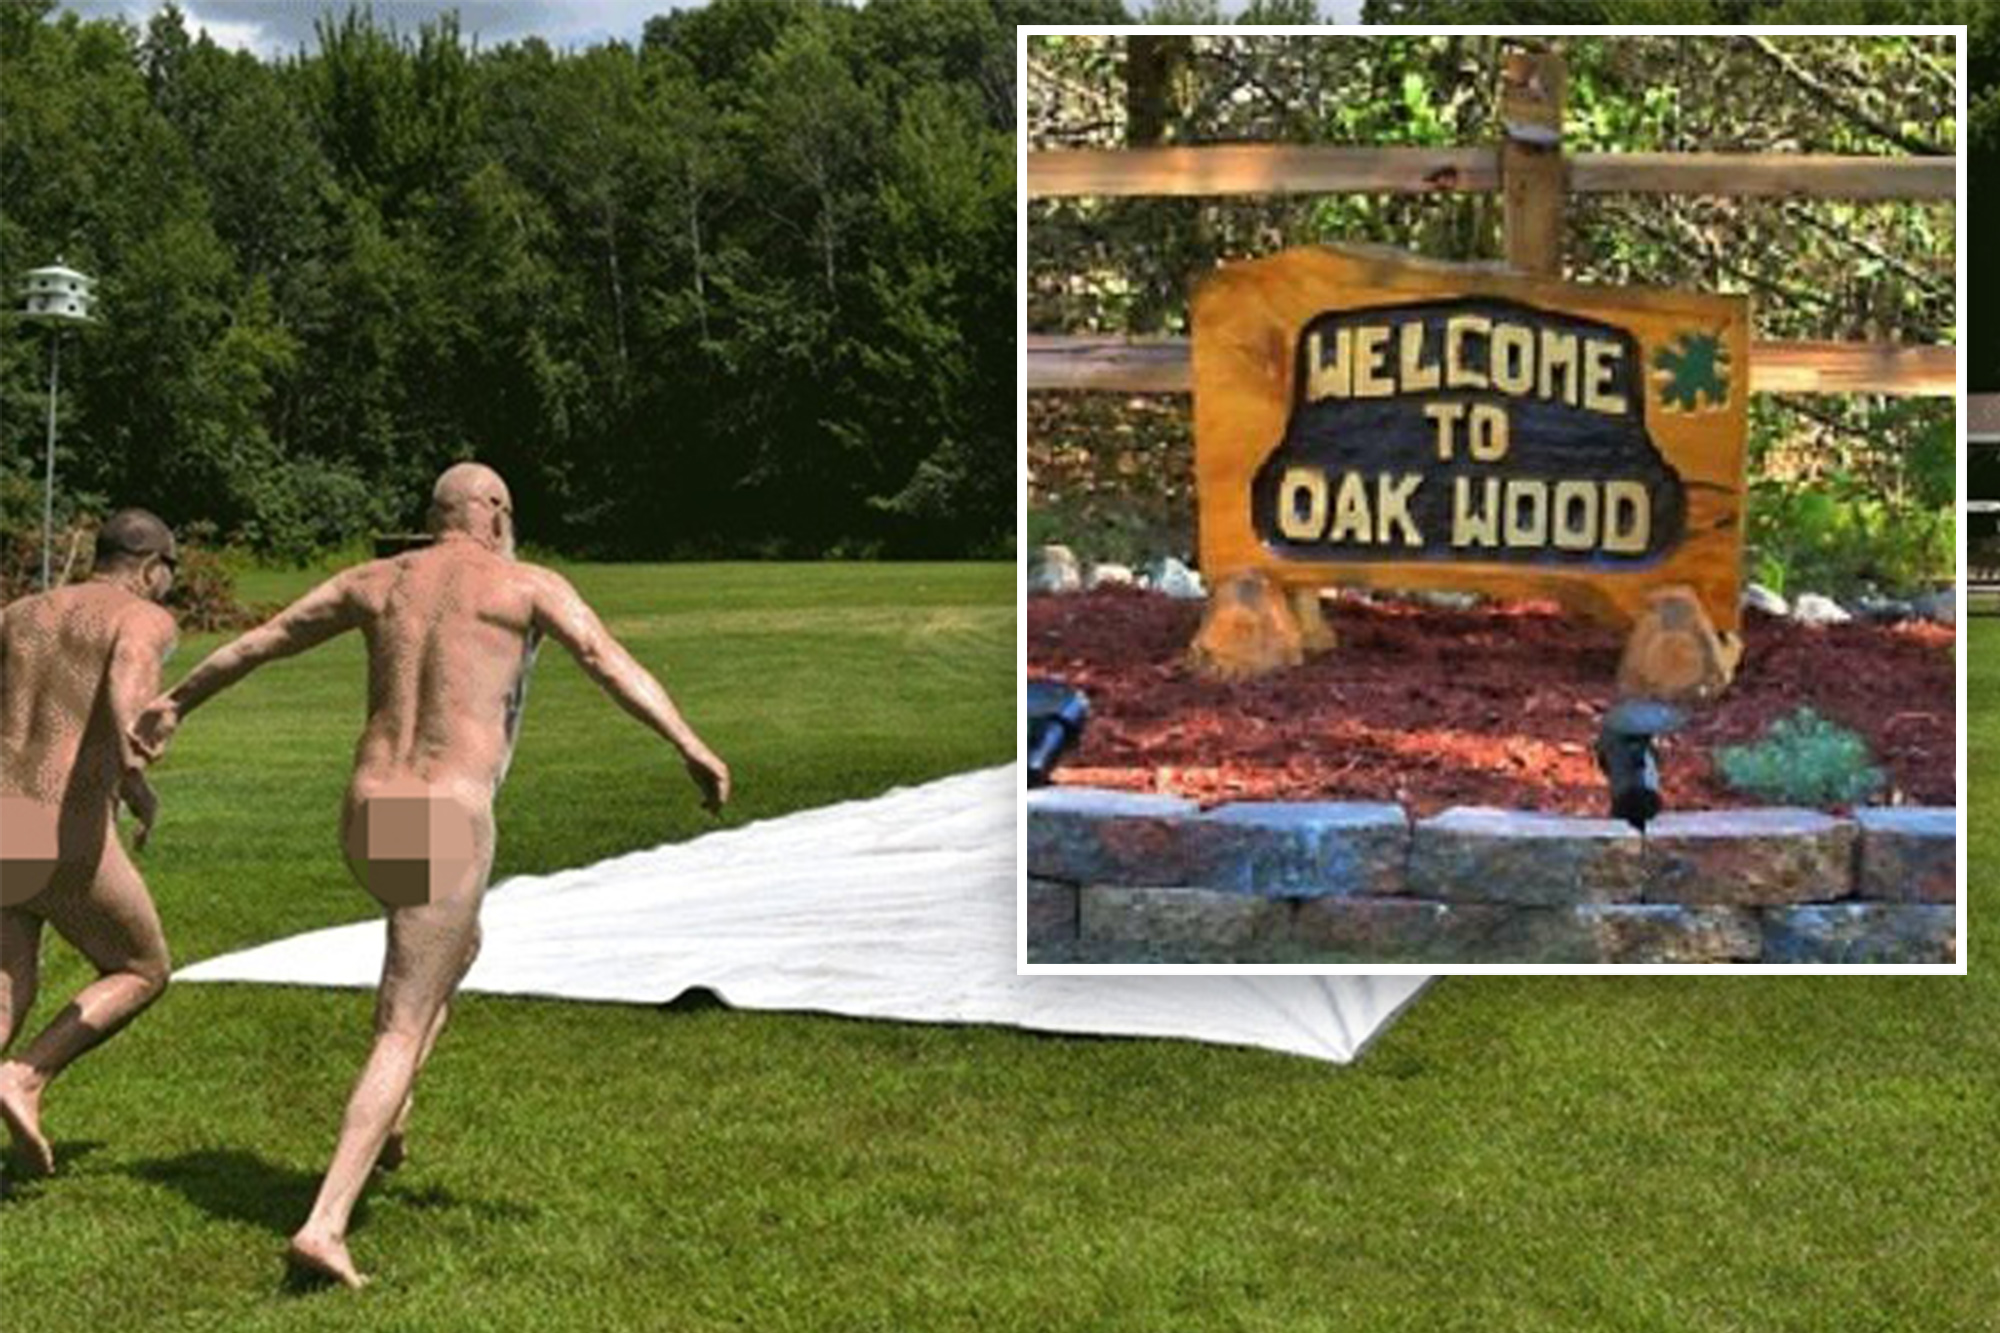 dina vieira add inside a nudist camp photo